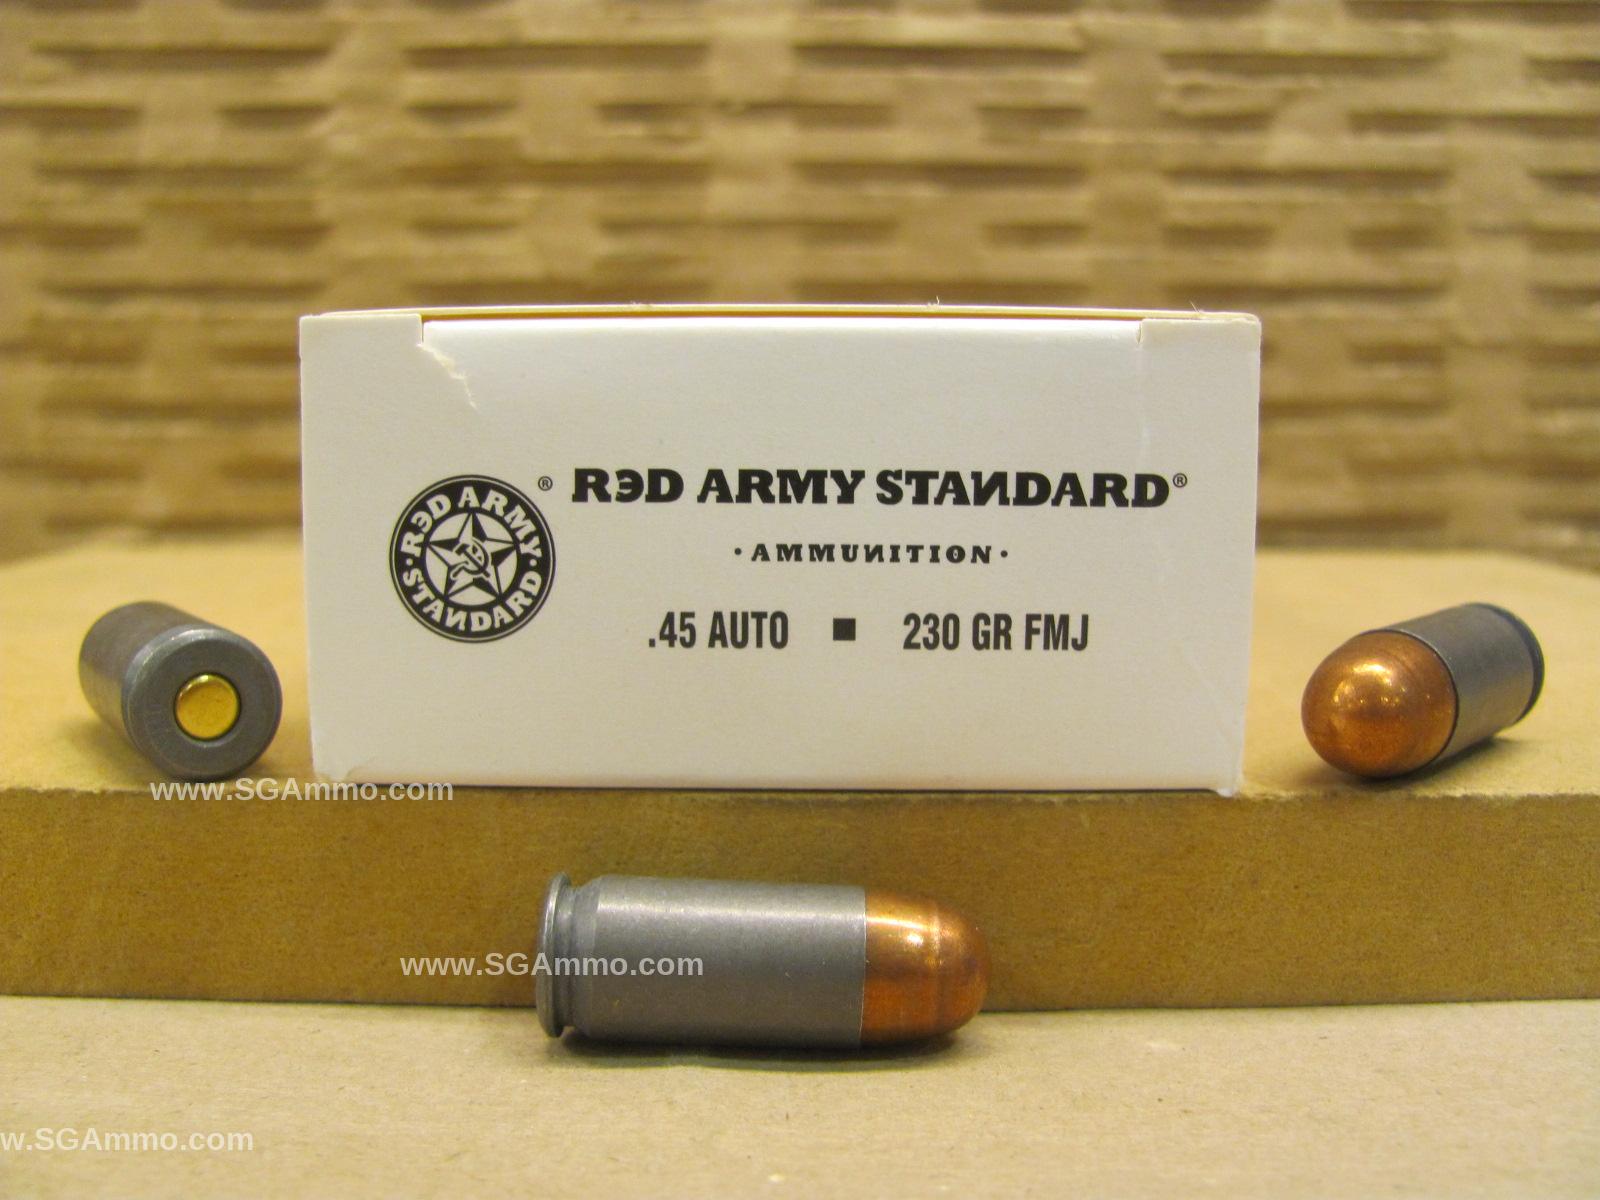 50 Round Box - 45 Auto 230 Grain FMJ Red Army Standard Steel Case Ammo - AM3262